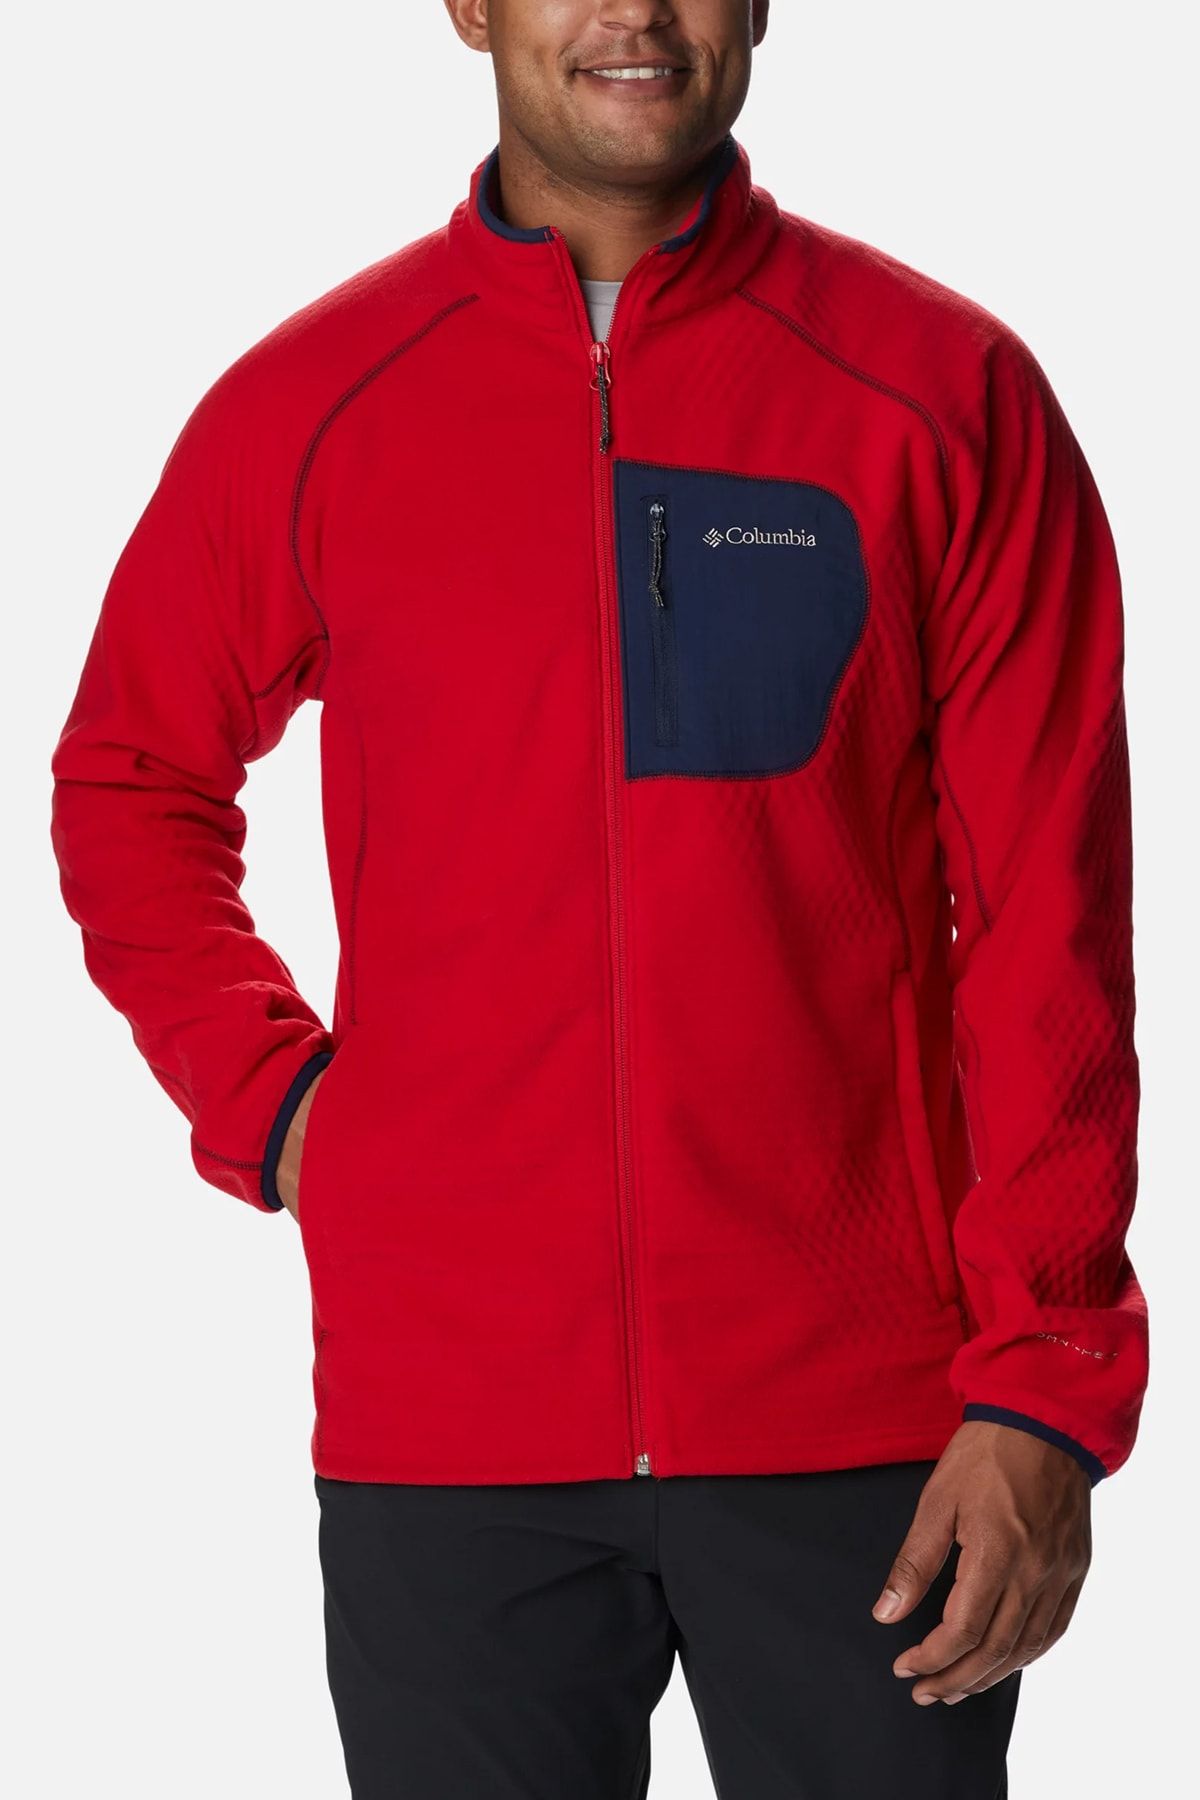 Columbia Erkek Kırmızı Sweatshirt  Model Kodu  2016081613